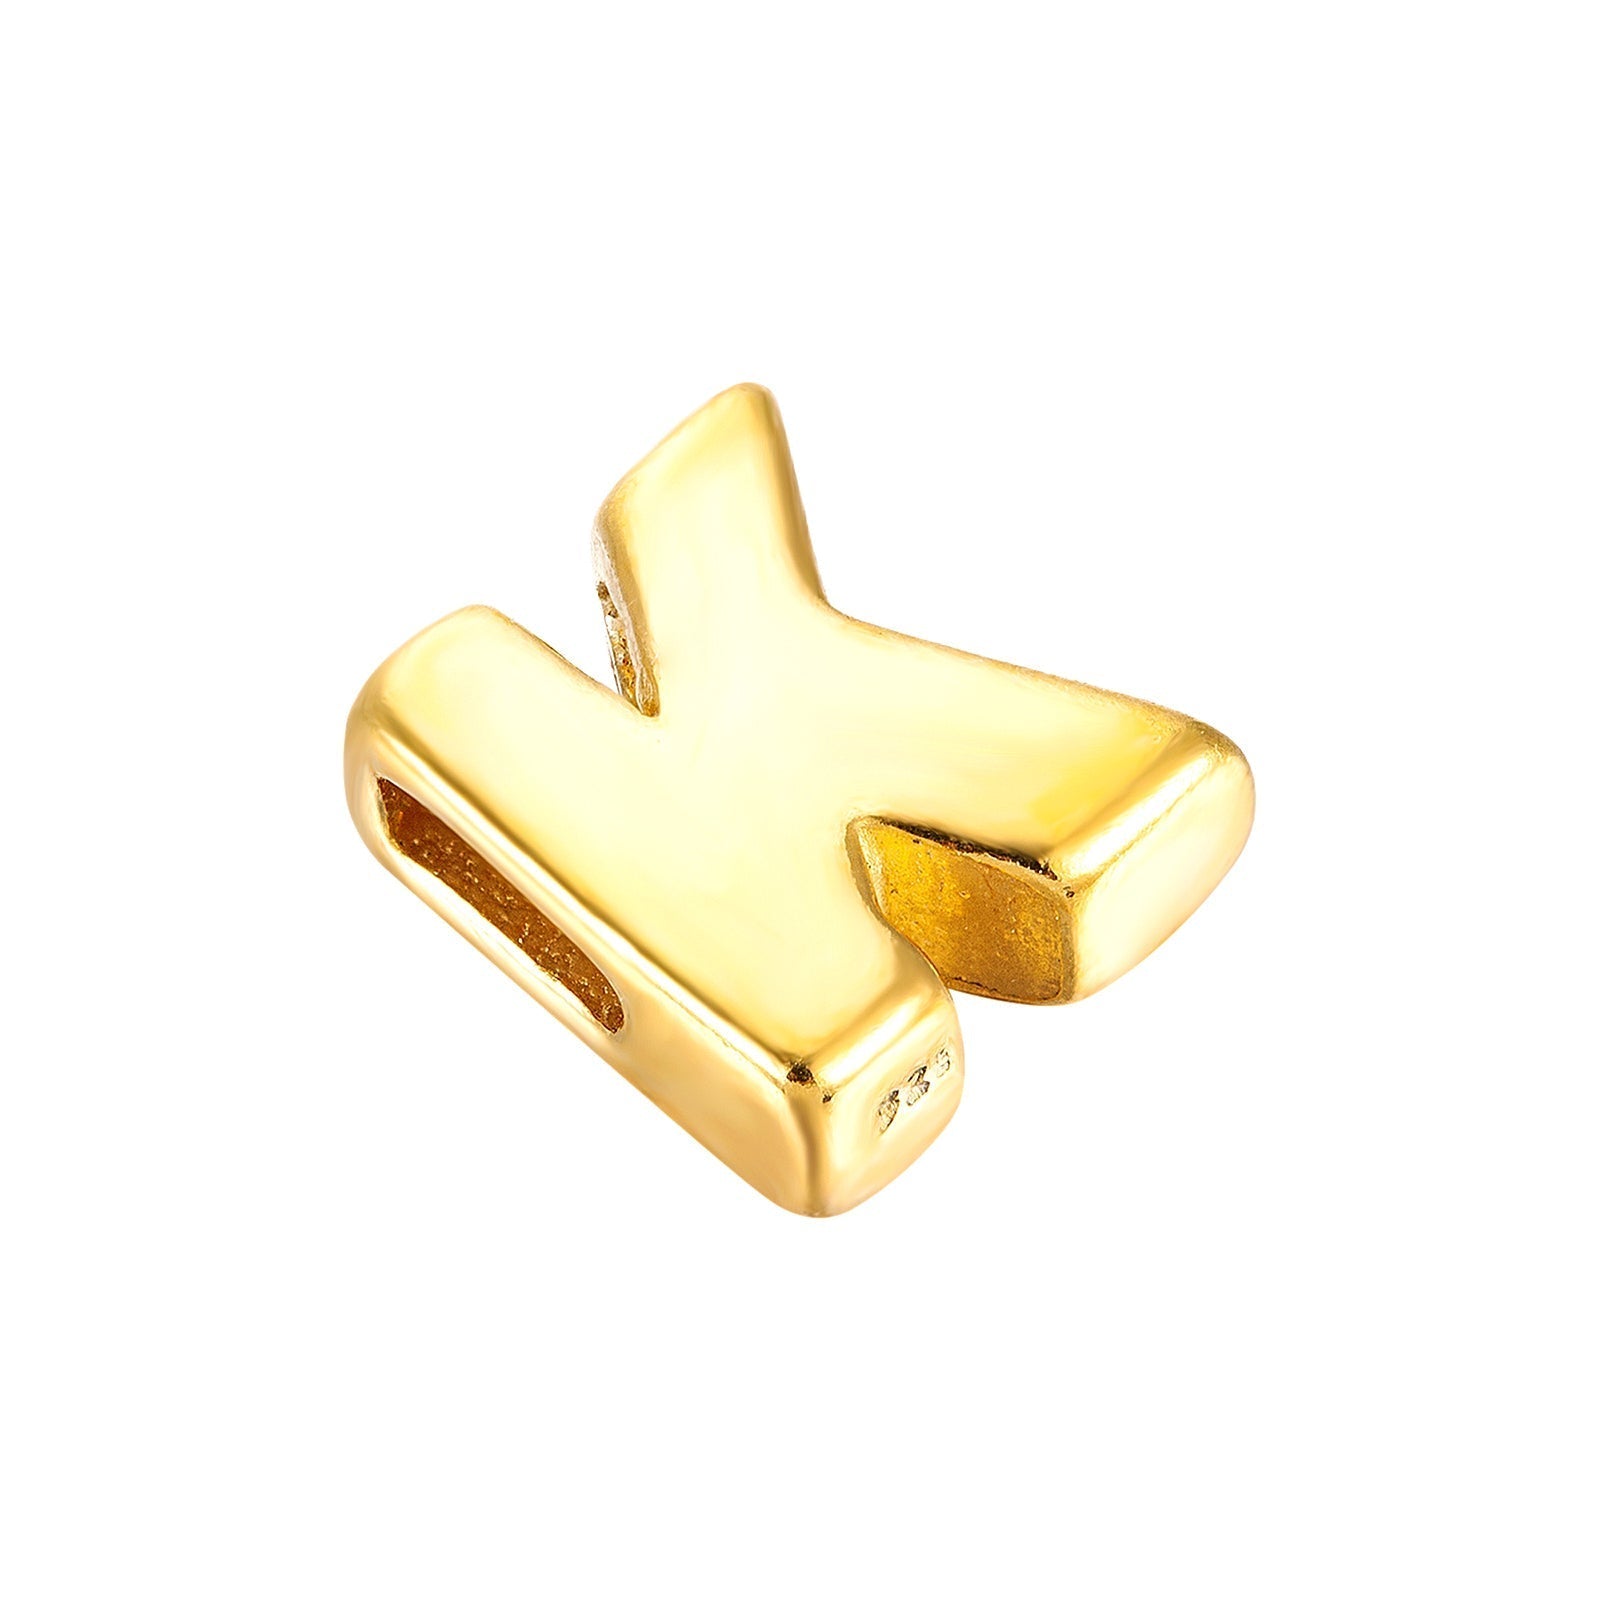 Seol Gold - Threader alphabet charm